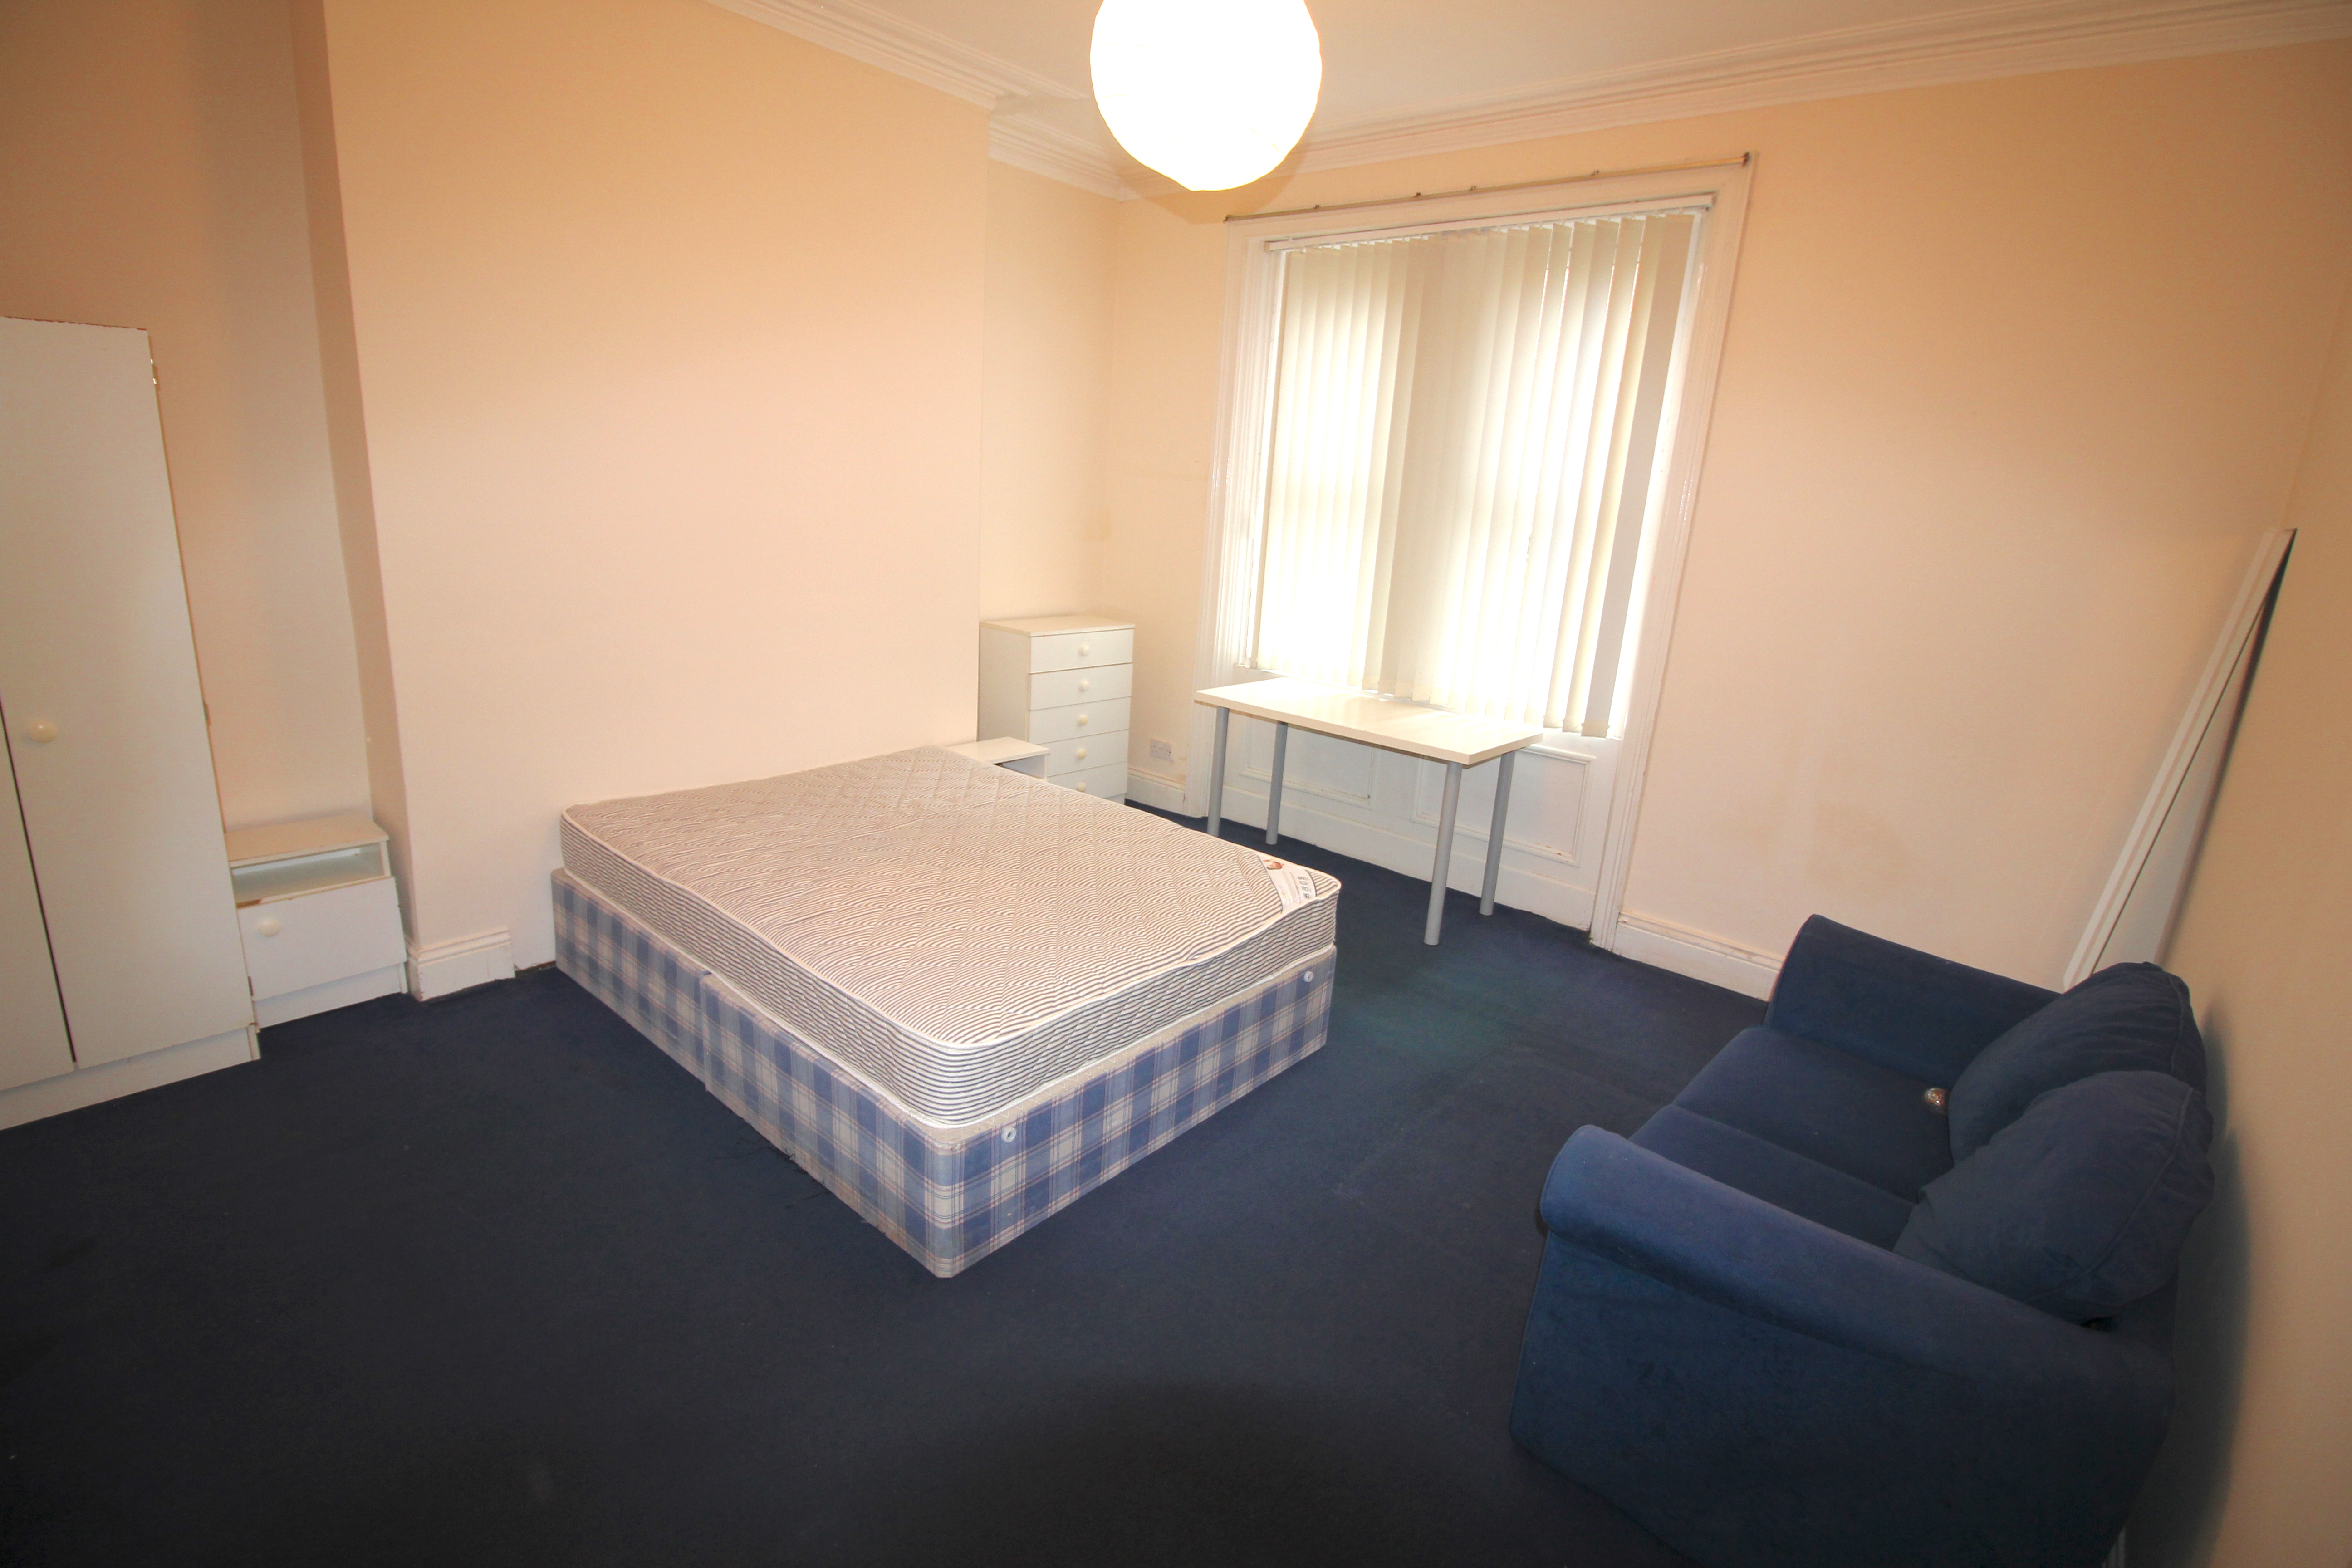 8 Bed, Osborne Road NE2 £99.00PPPW